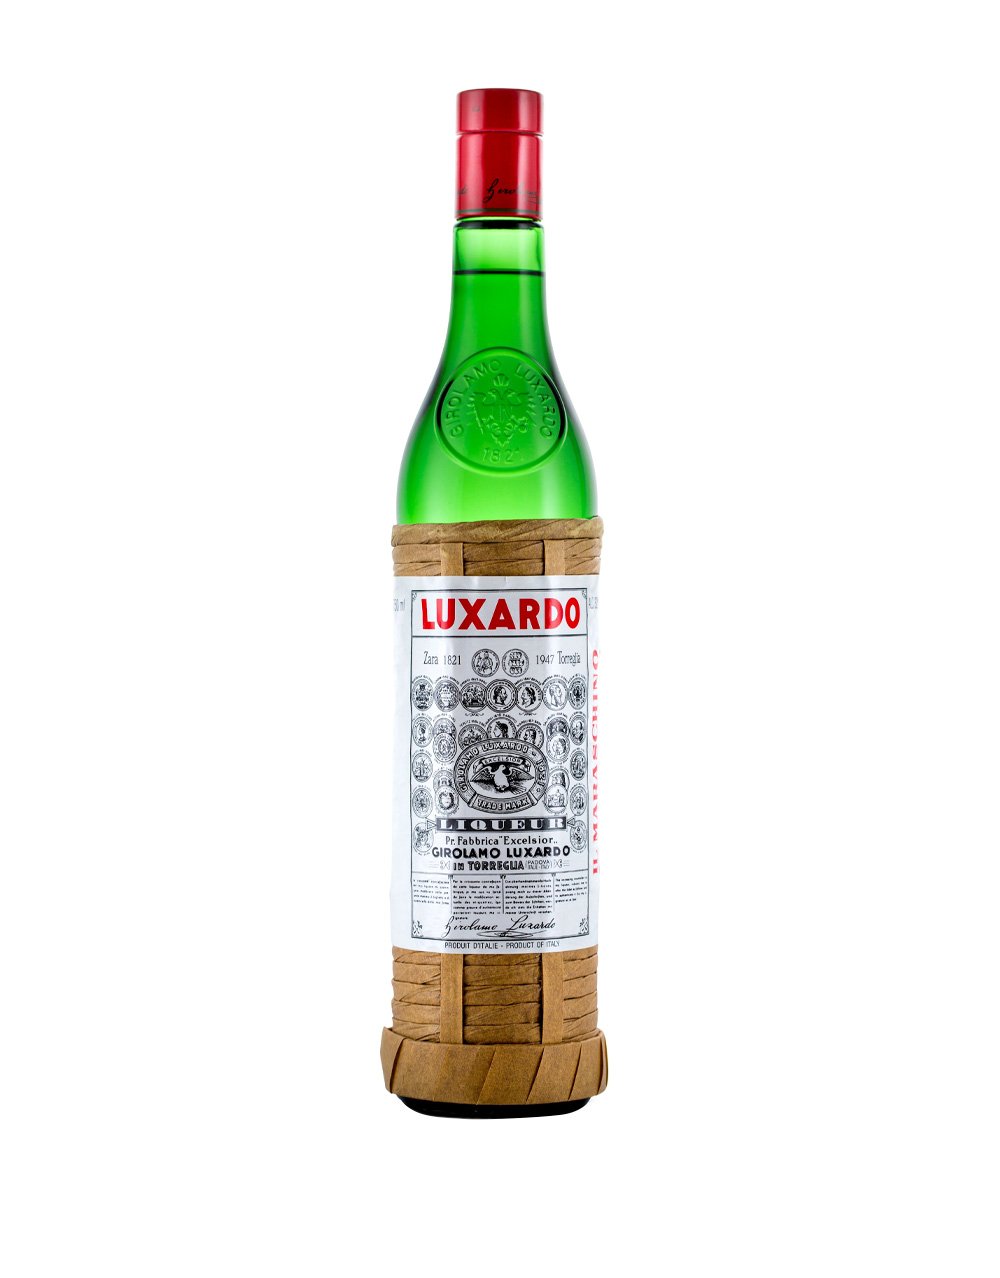 Luxardo Maraschino bottle